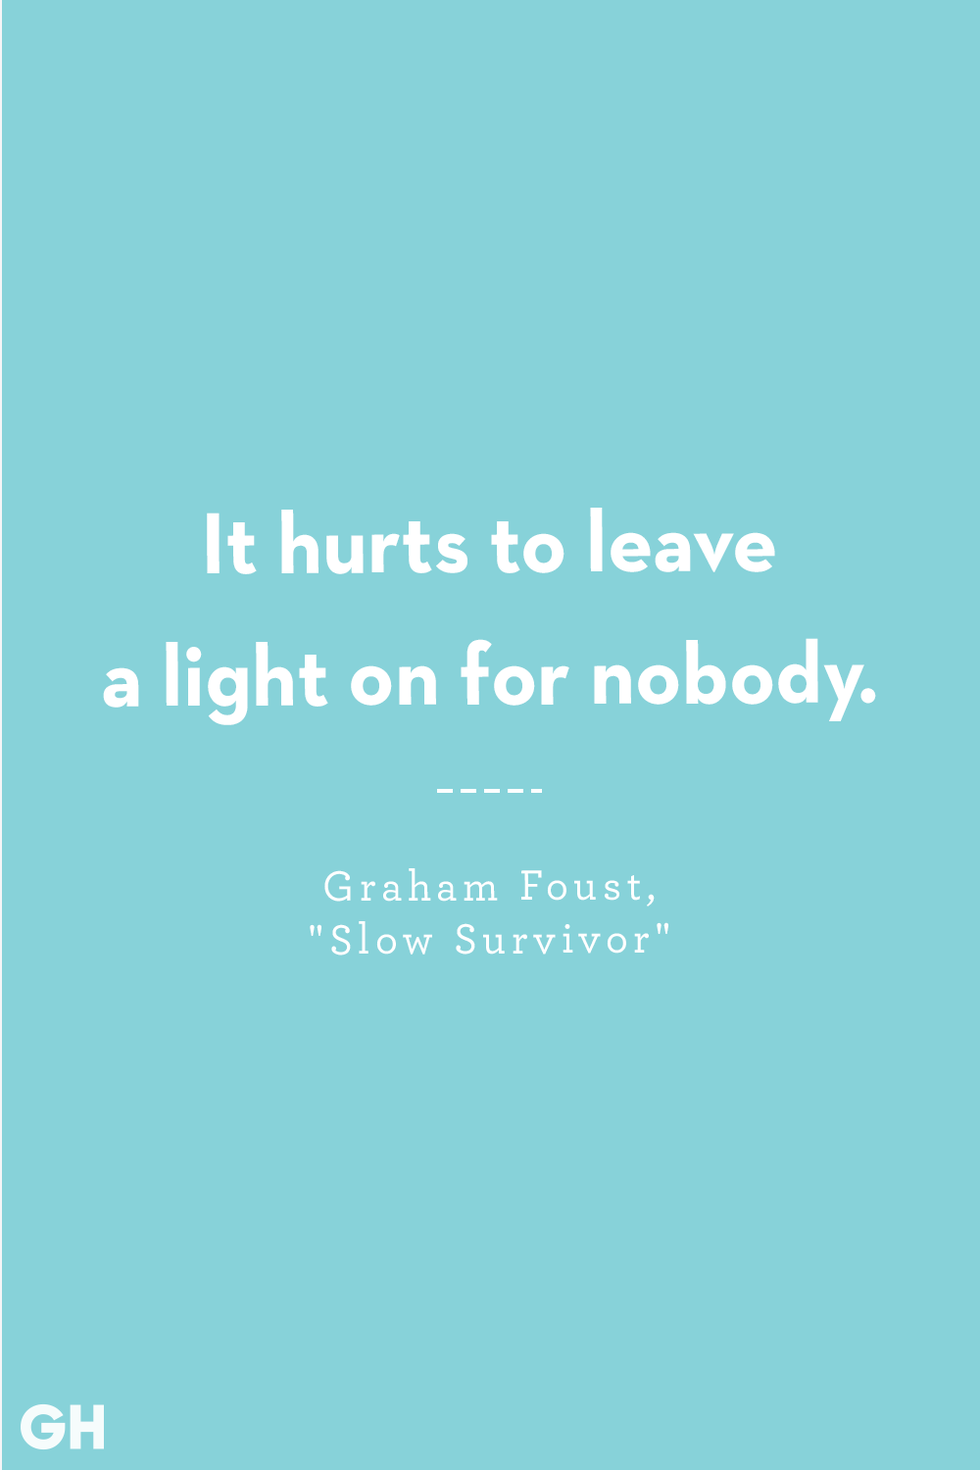 sad quotes graham foust slow survivor